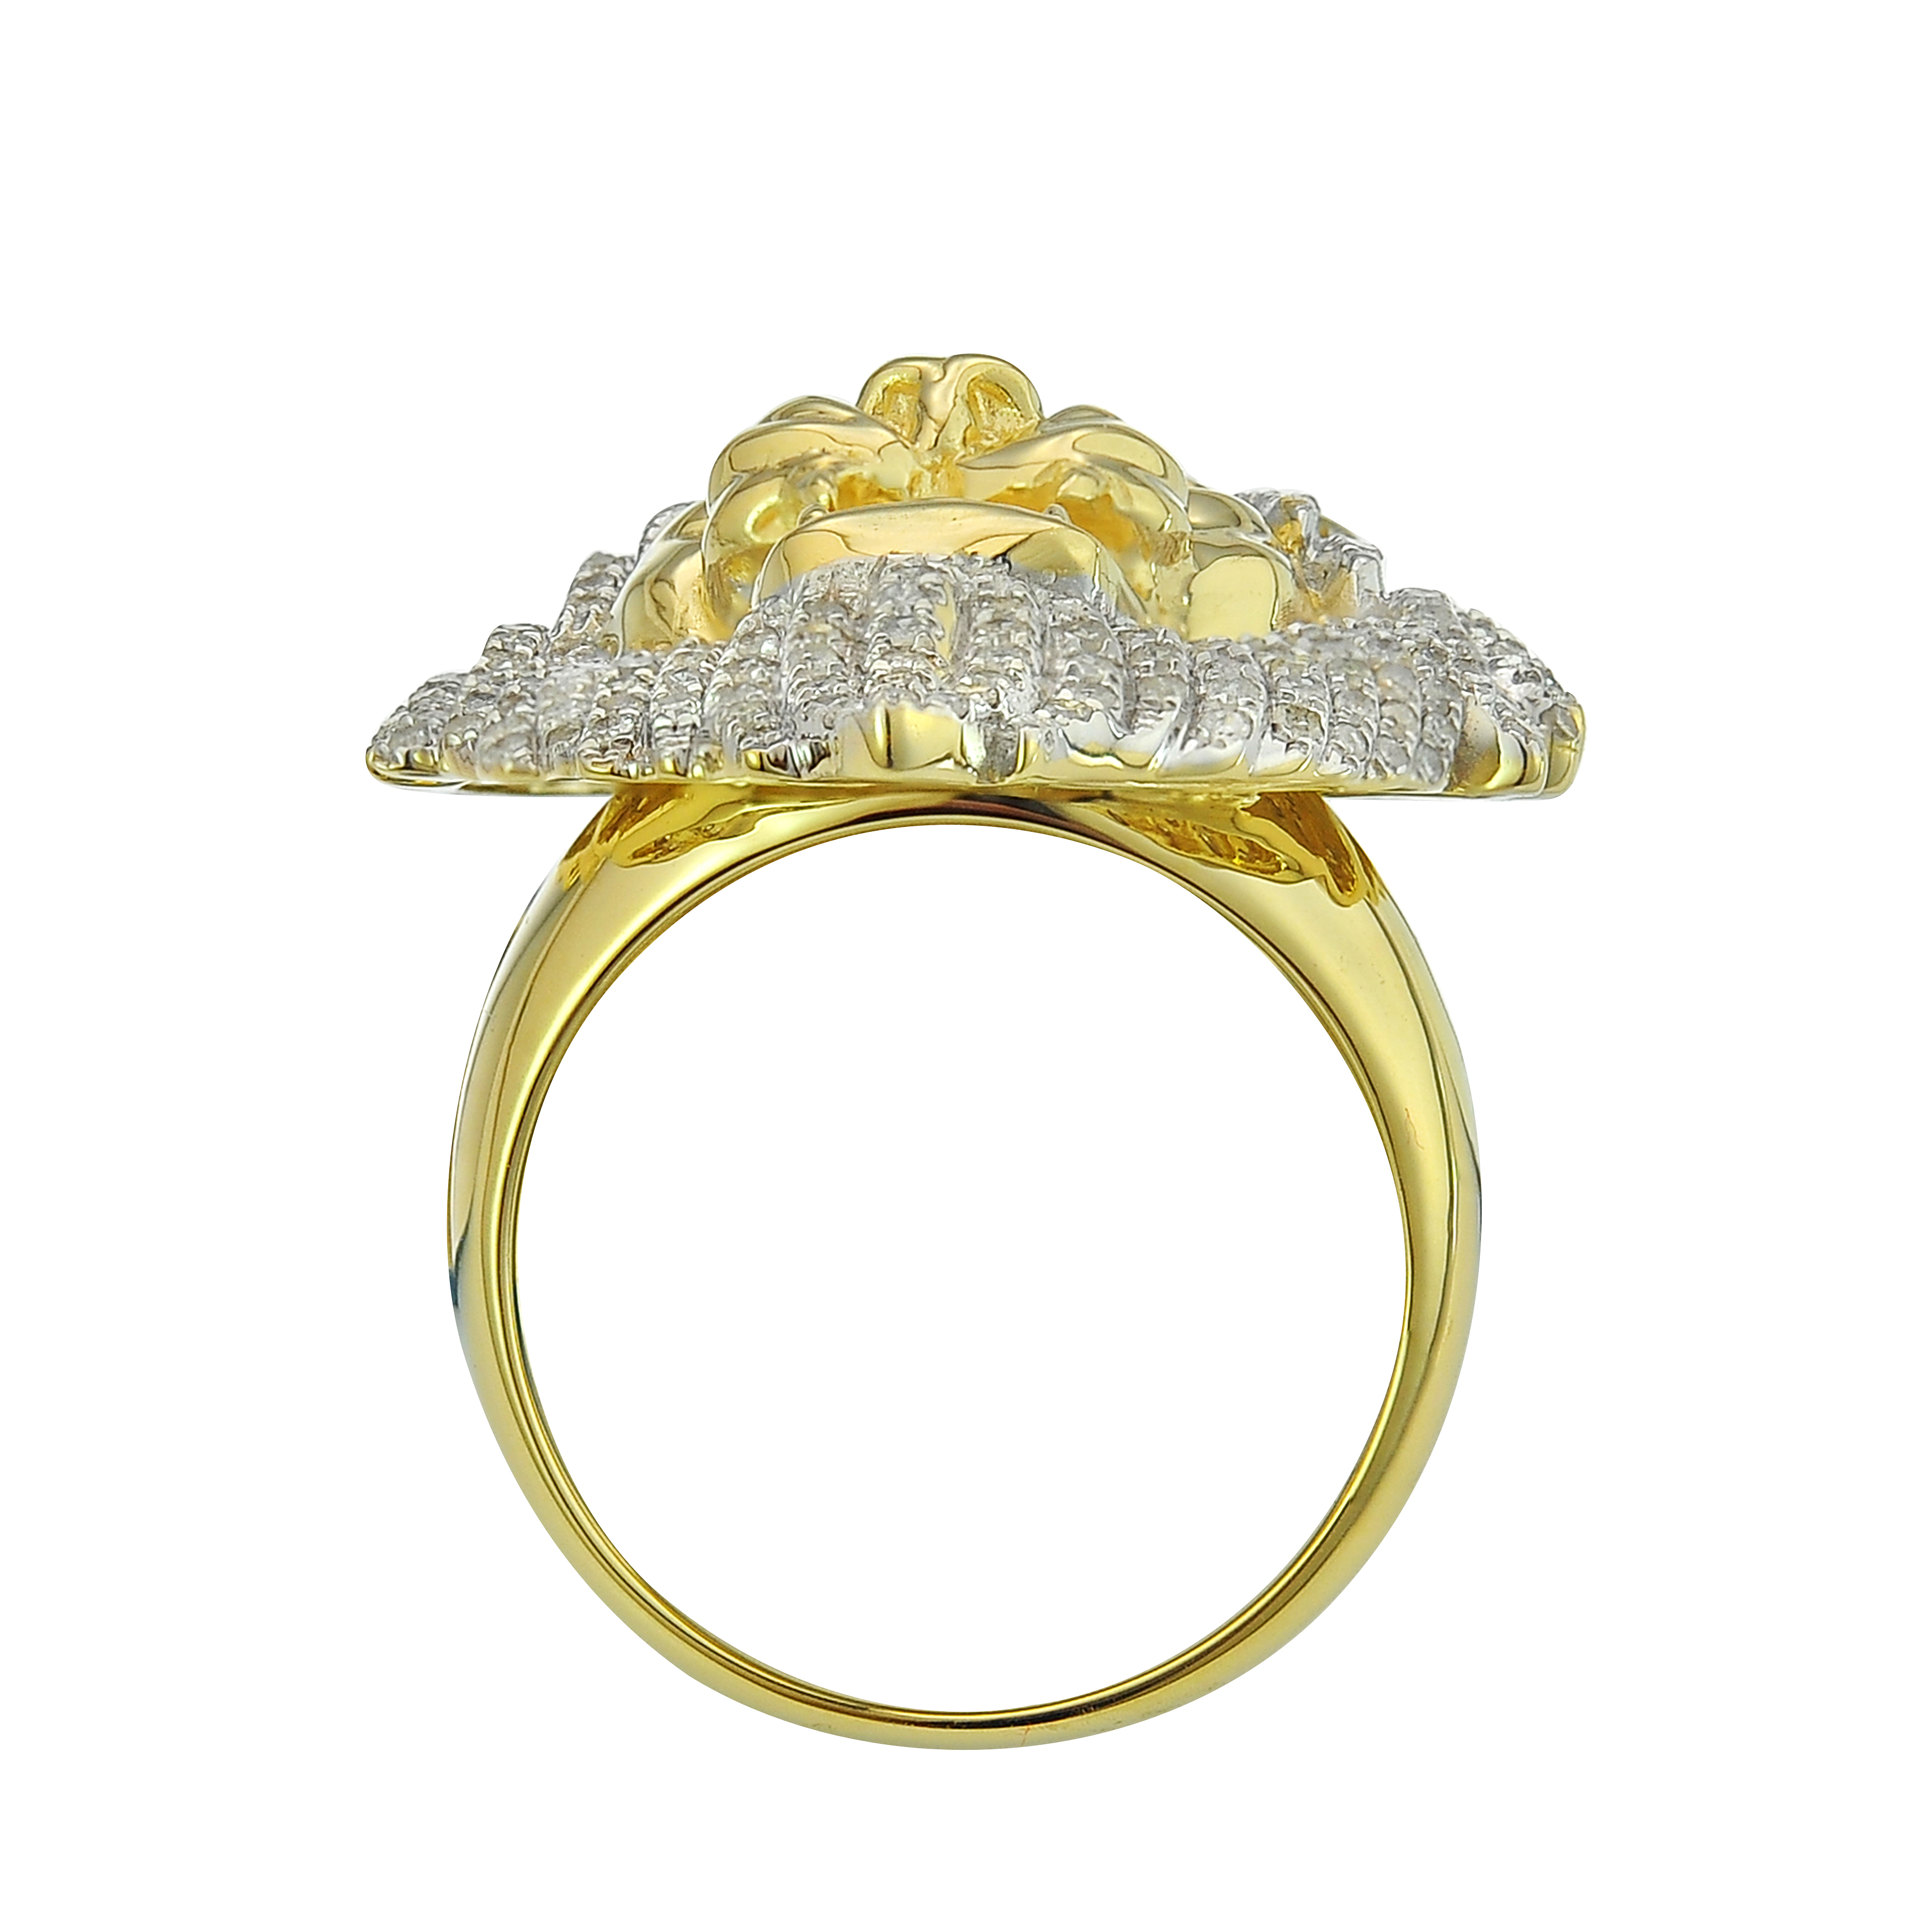 Diamond Lion Head Ring 1.11 ct. 10K Yellow Gold